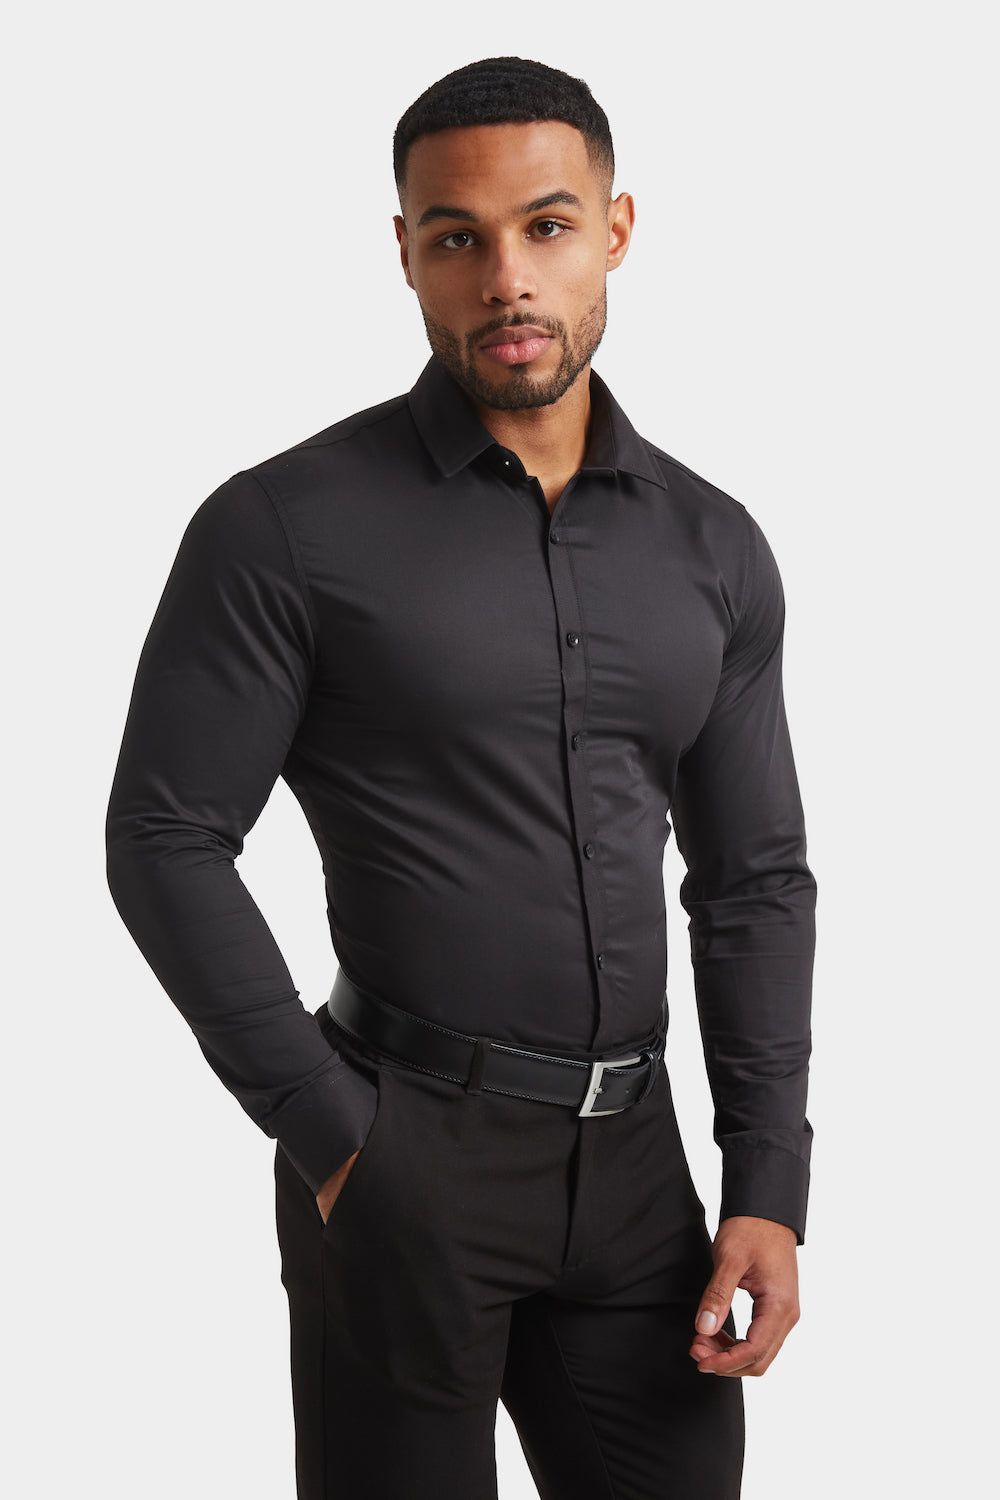 mens dress shirt black